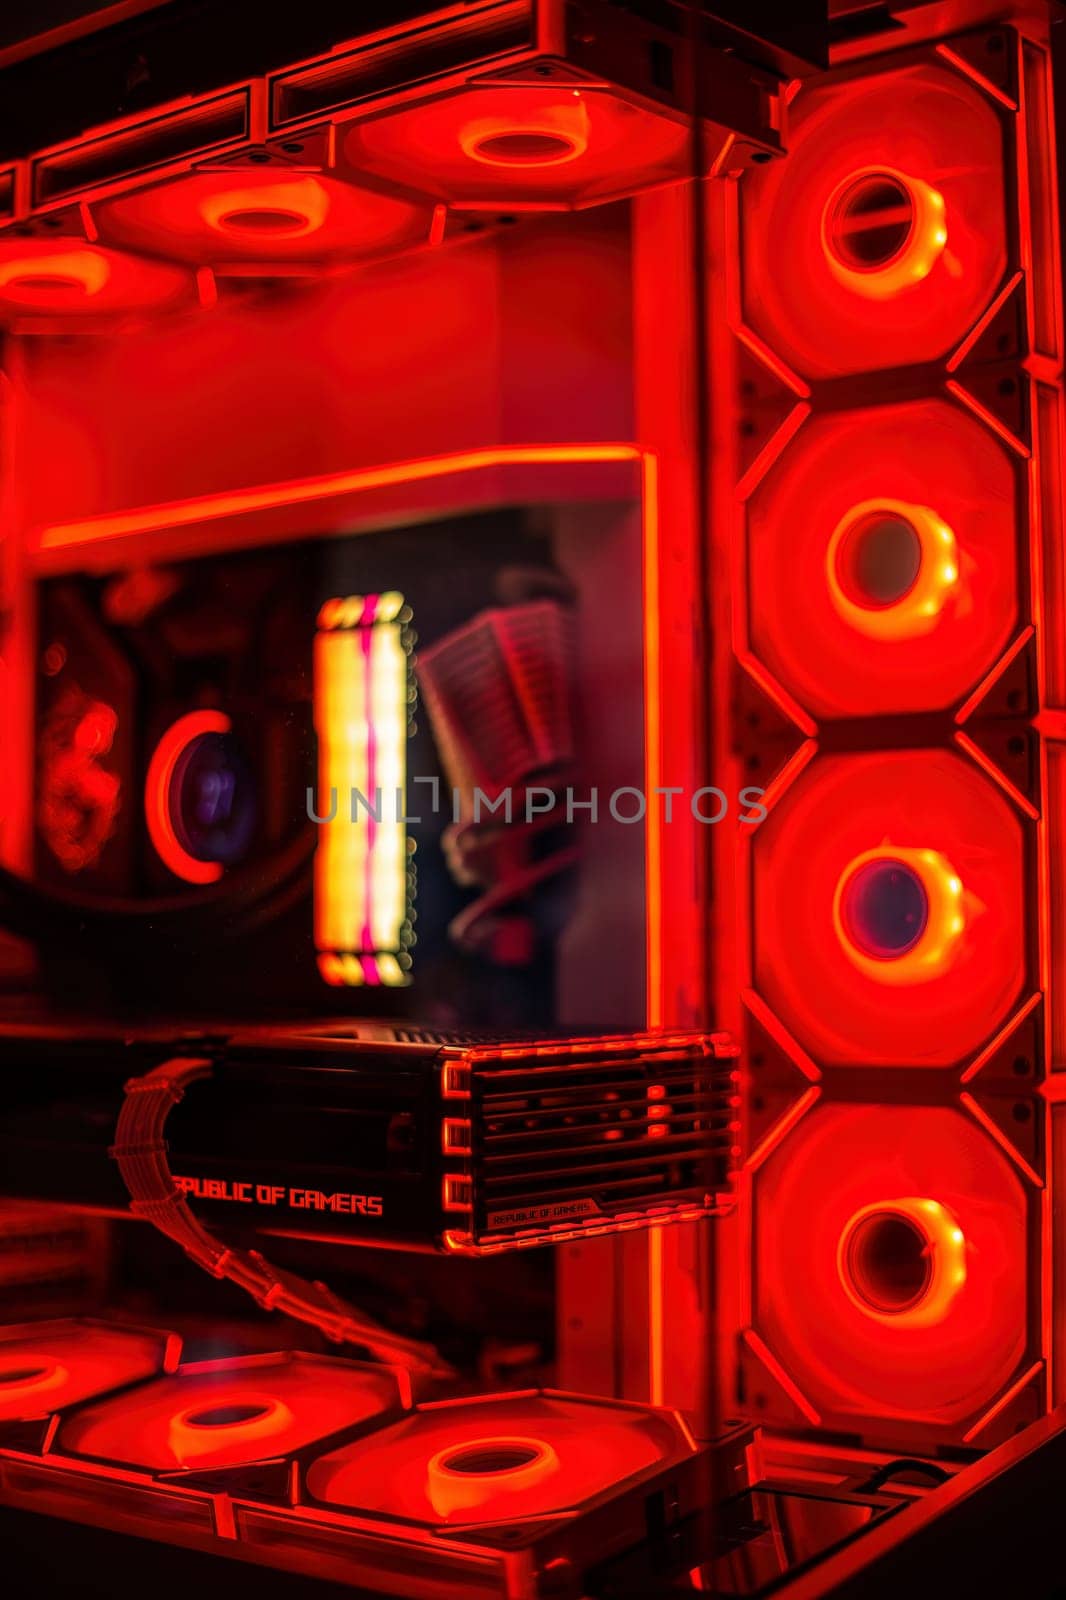 Illuminated Gaming PC Interior by pippocarlot